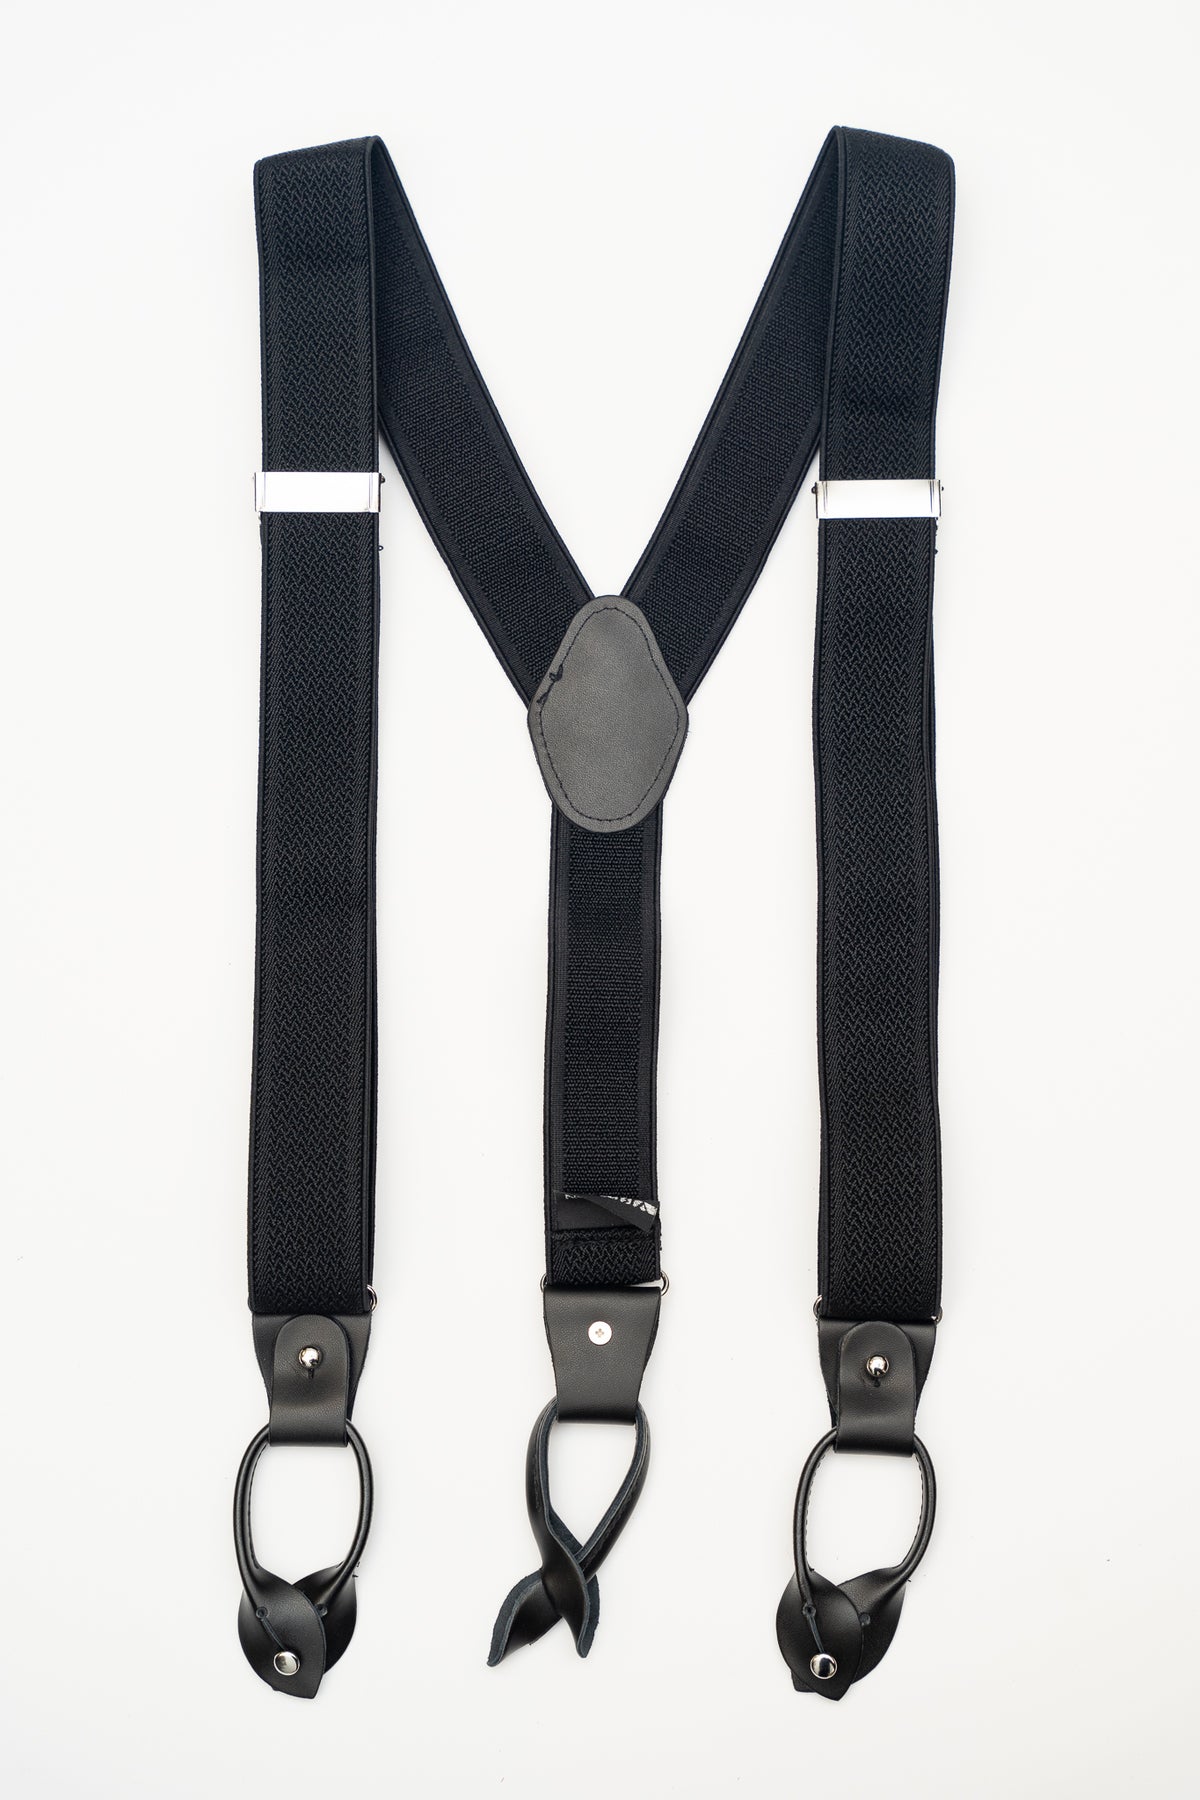 AR Black Suspenders - The Suit Depot